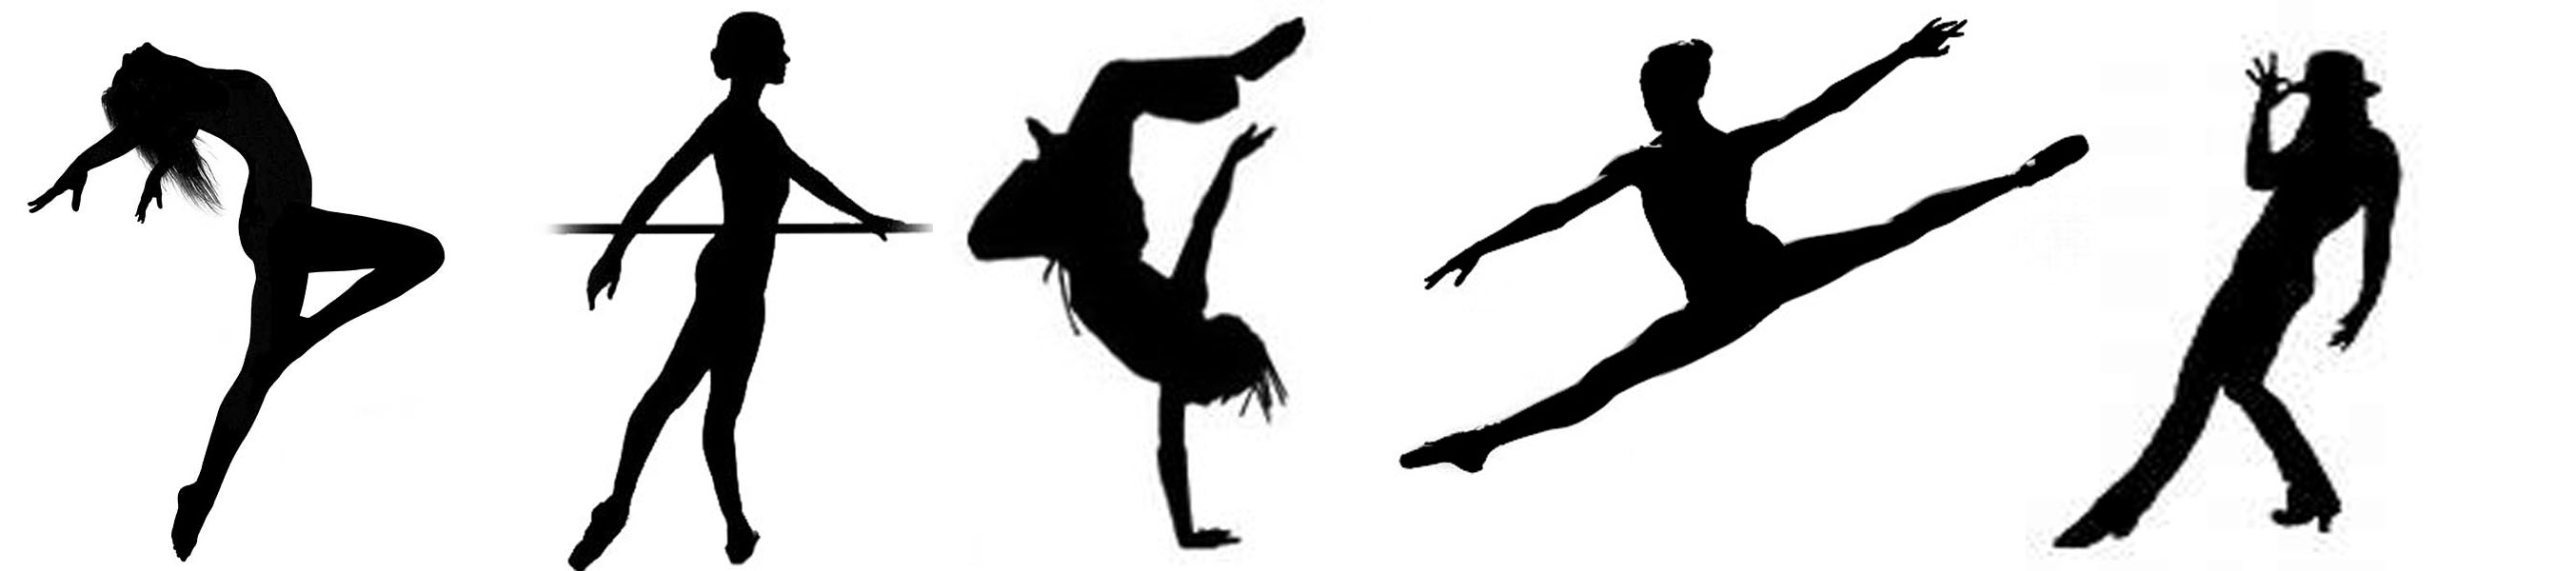 Dance | Recreational Sports